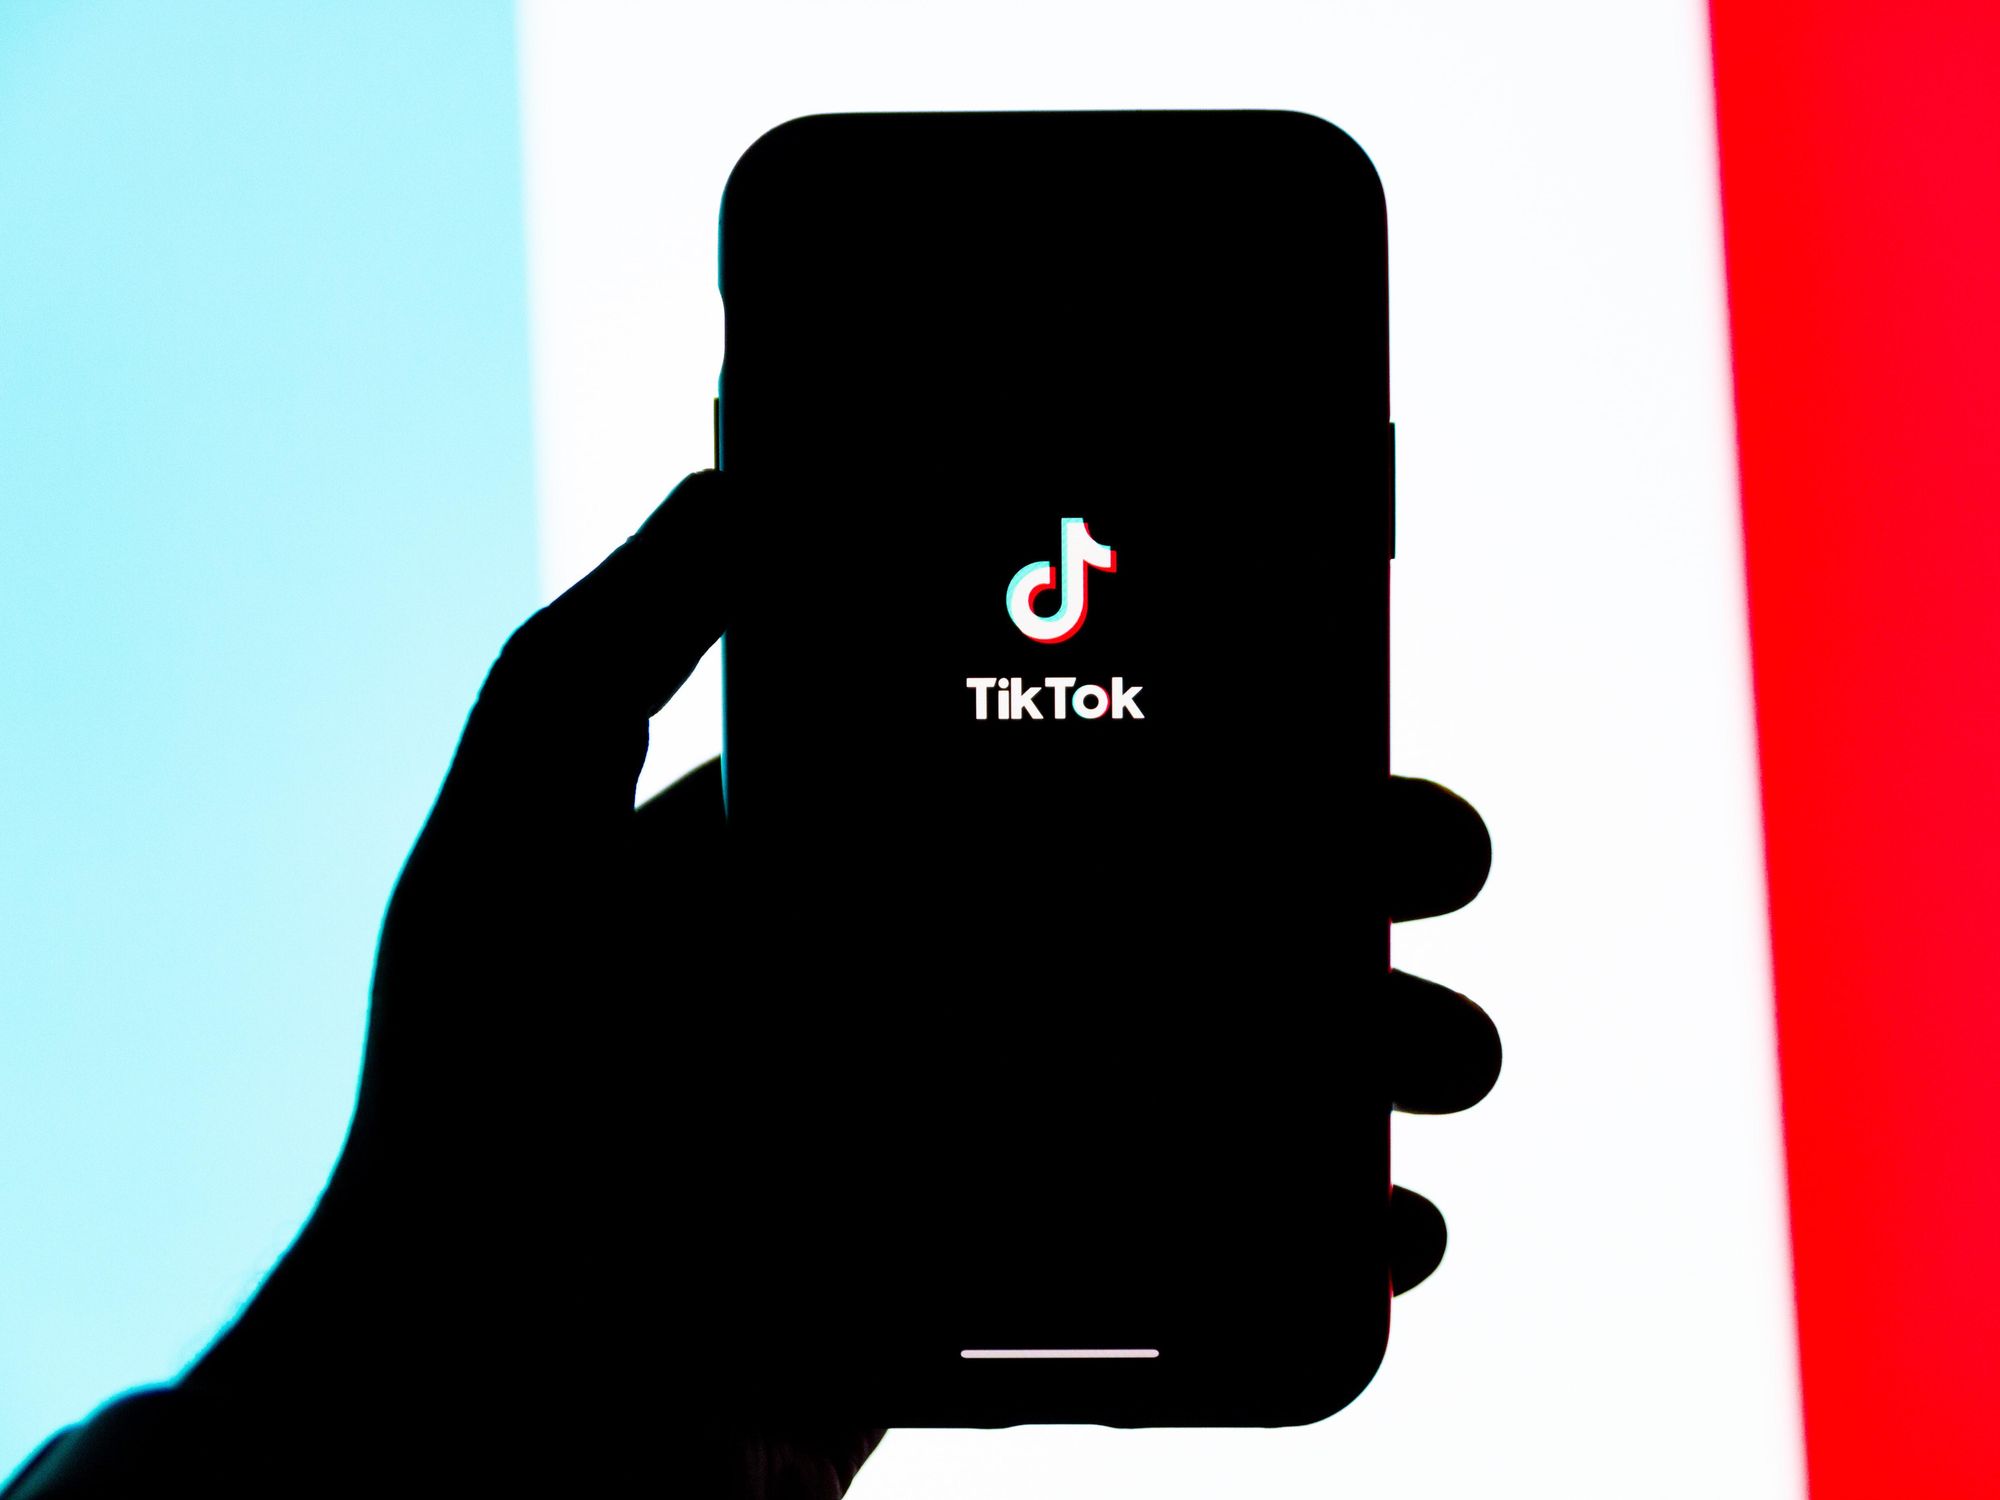 TikTok Parent ByteDance Eclipses $1B in Mobile Games Sales